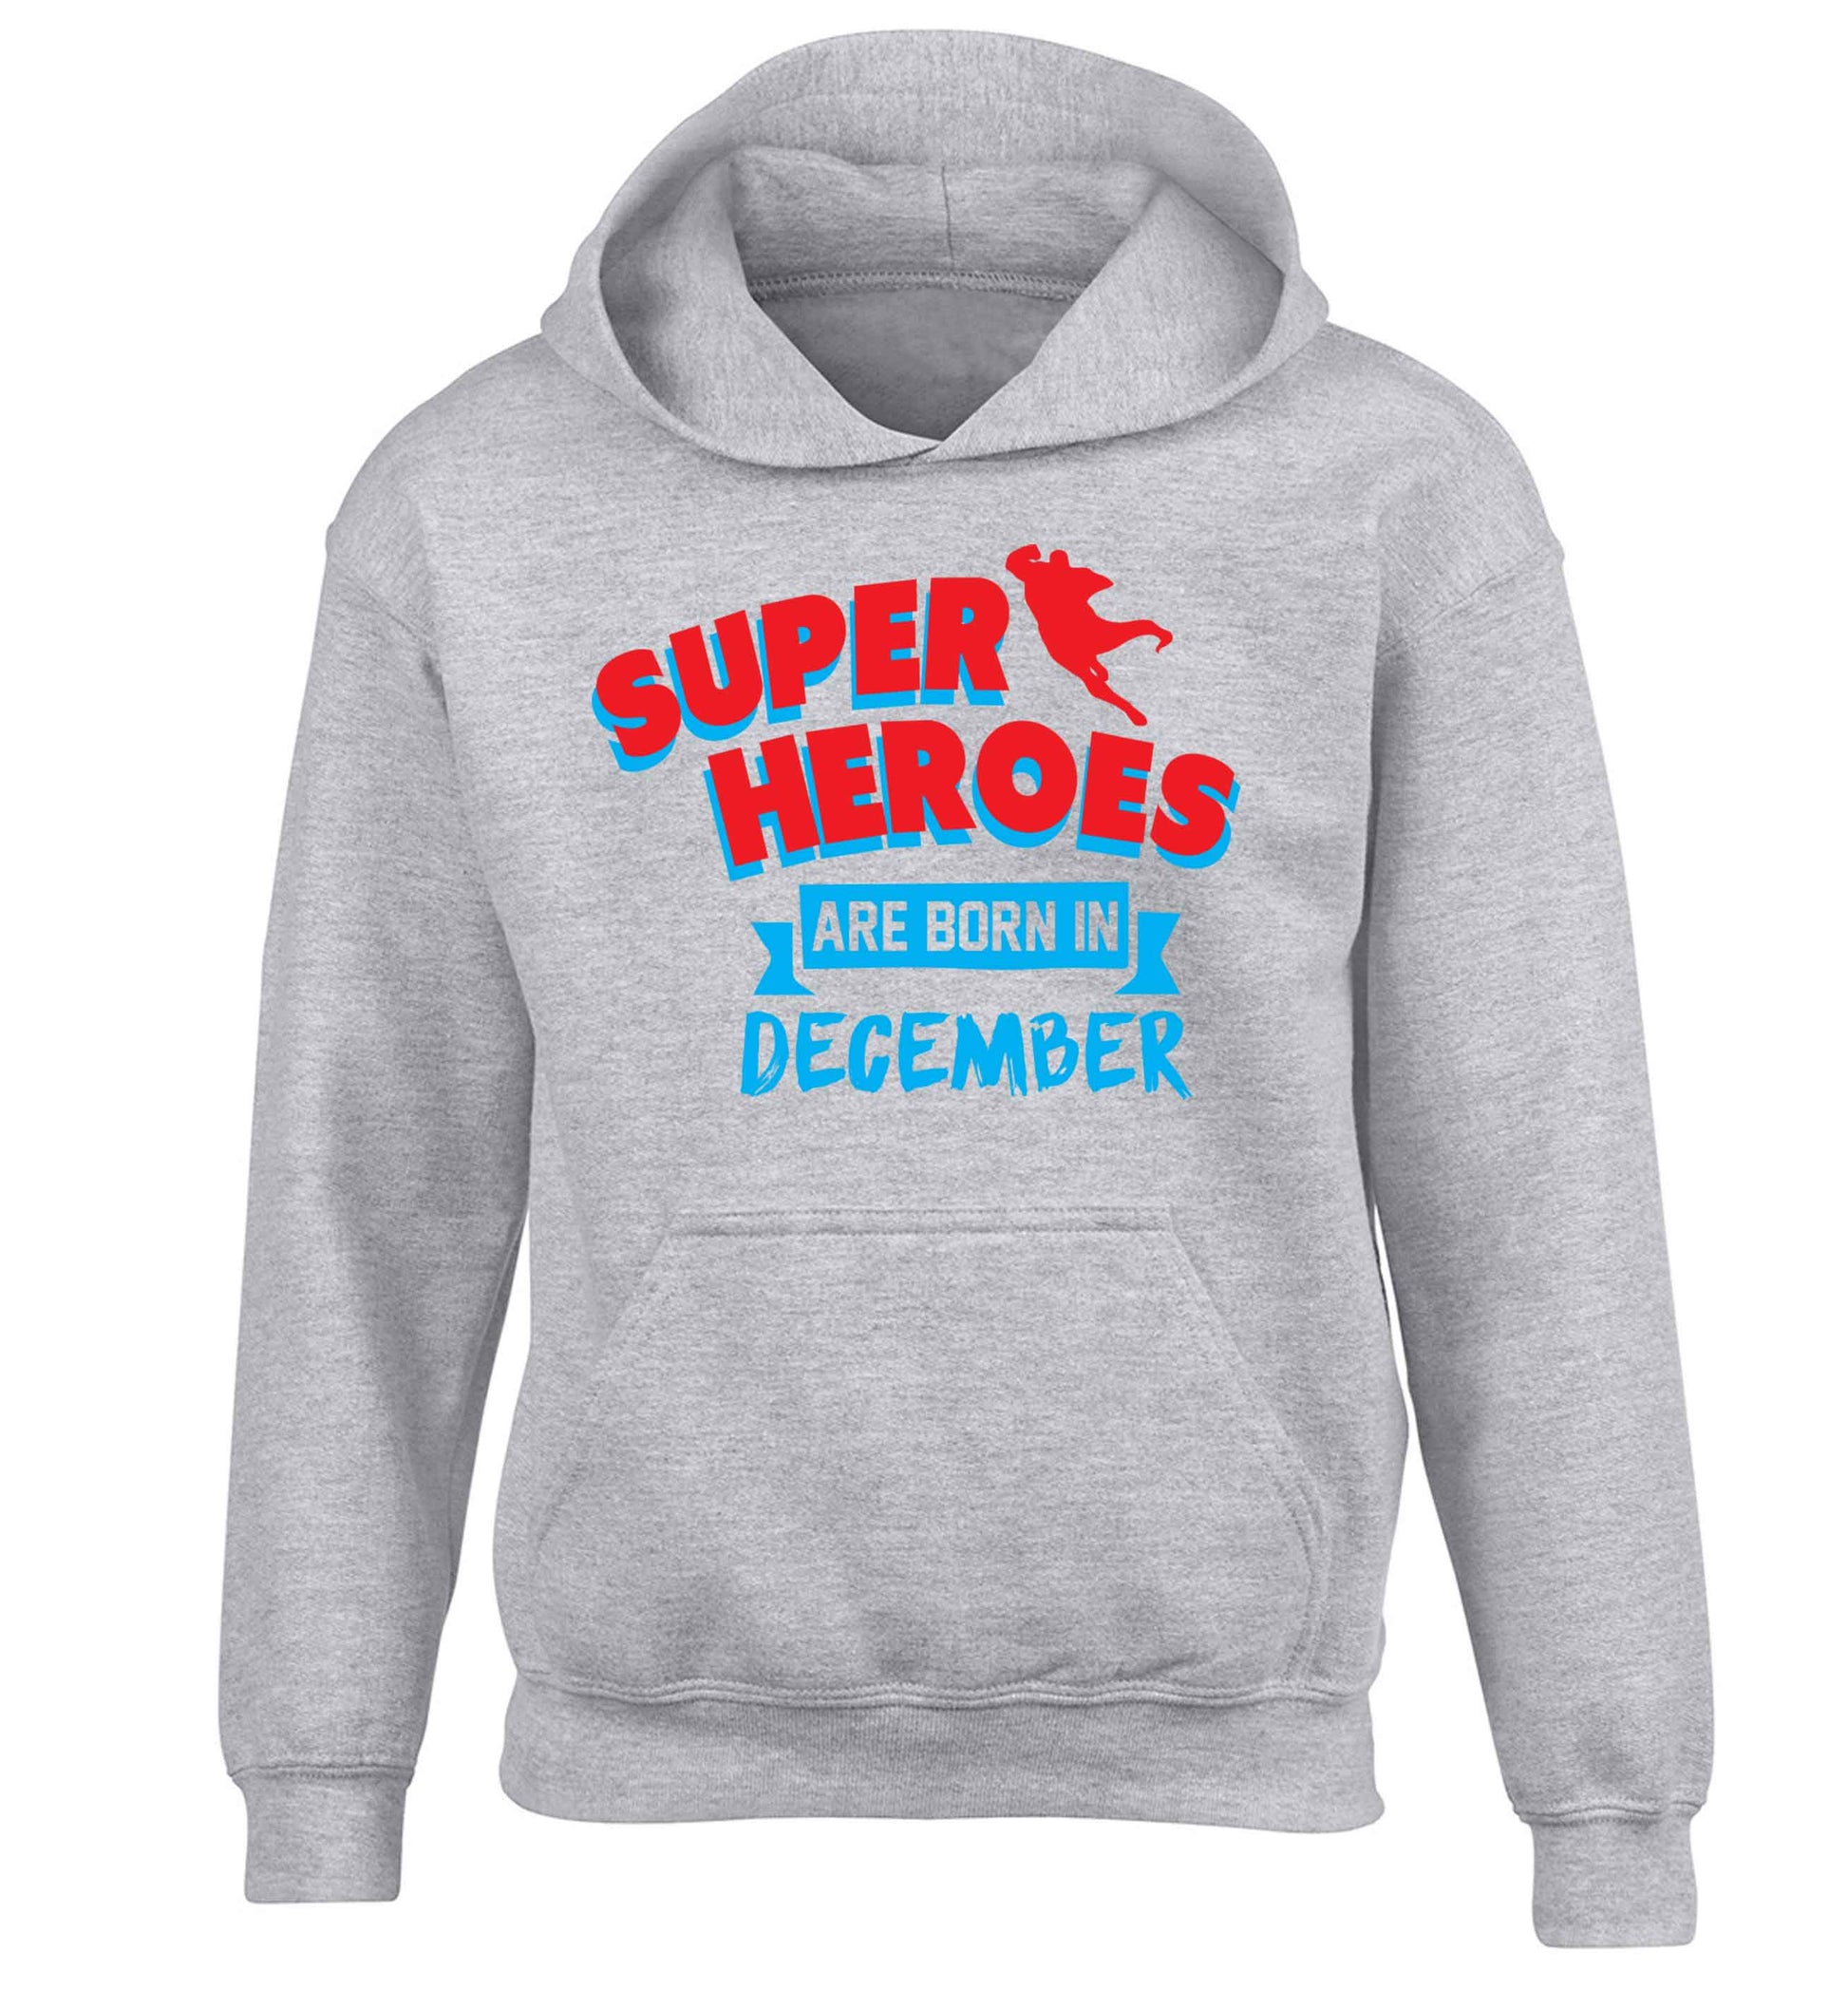 Superheroes are born in December children's grey hoodie 12-13 Years